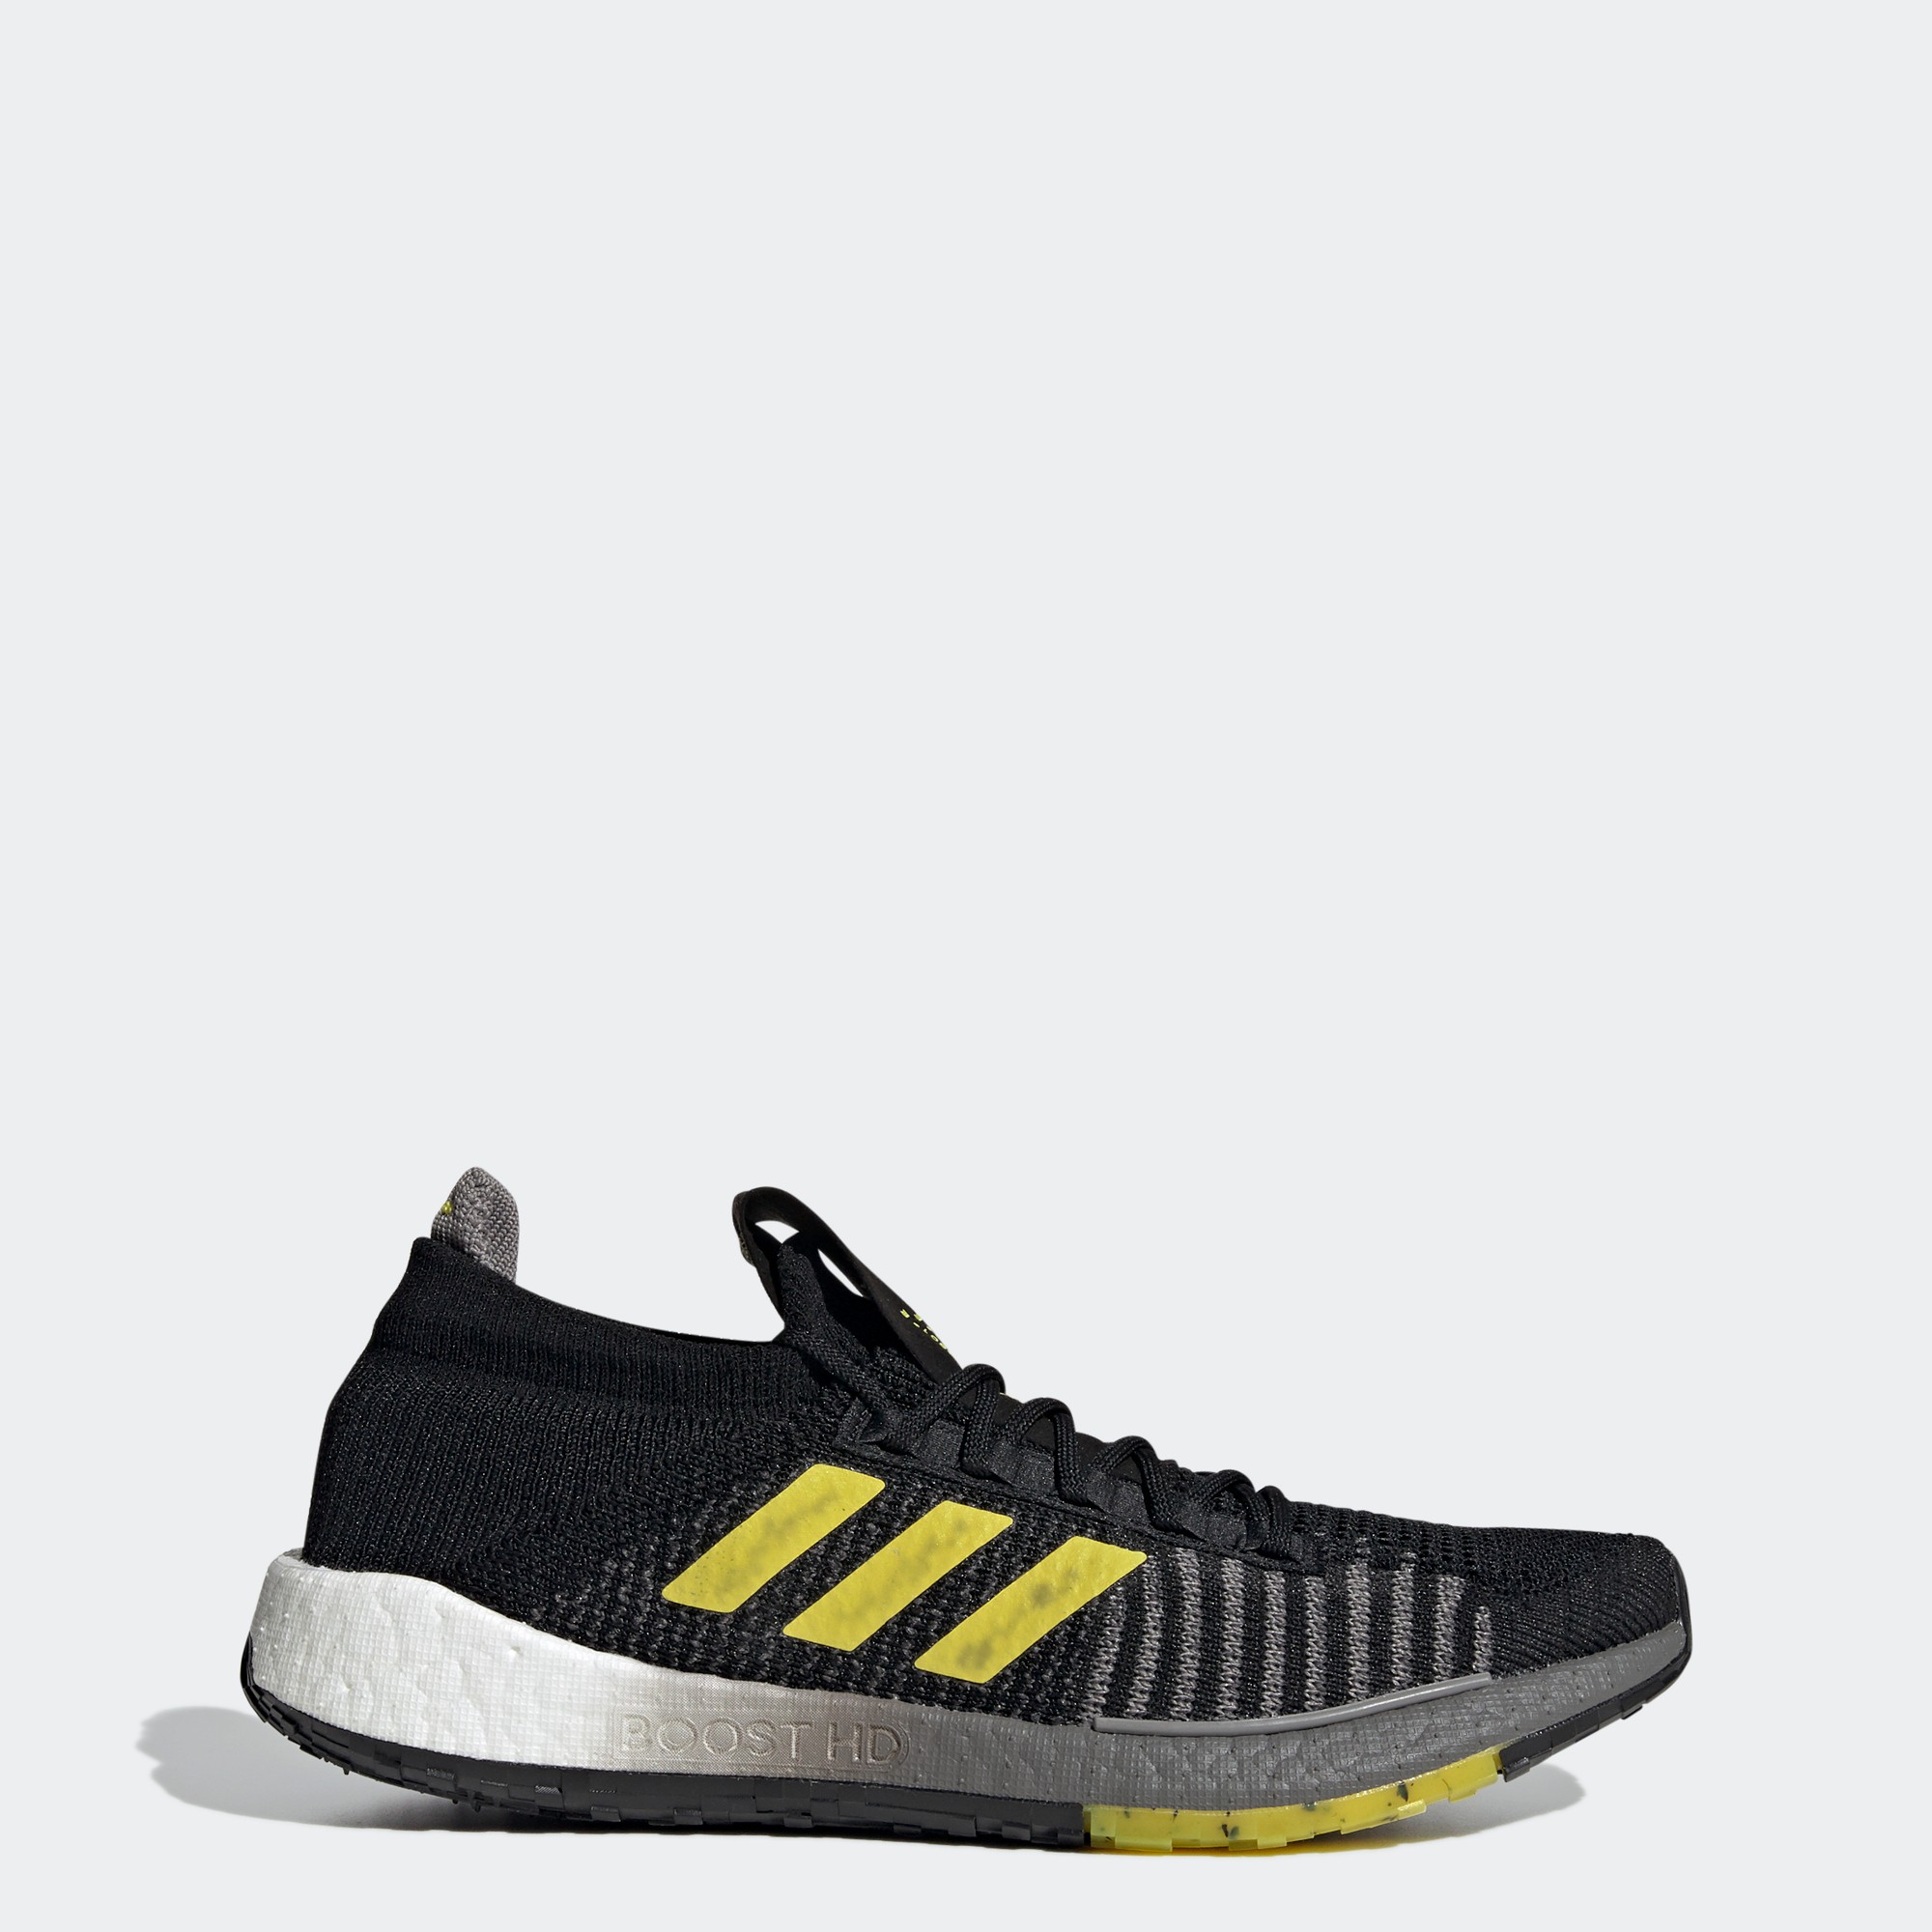 Buy Adidas Running Shoes Online | lazada.sg